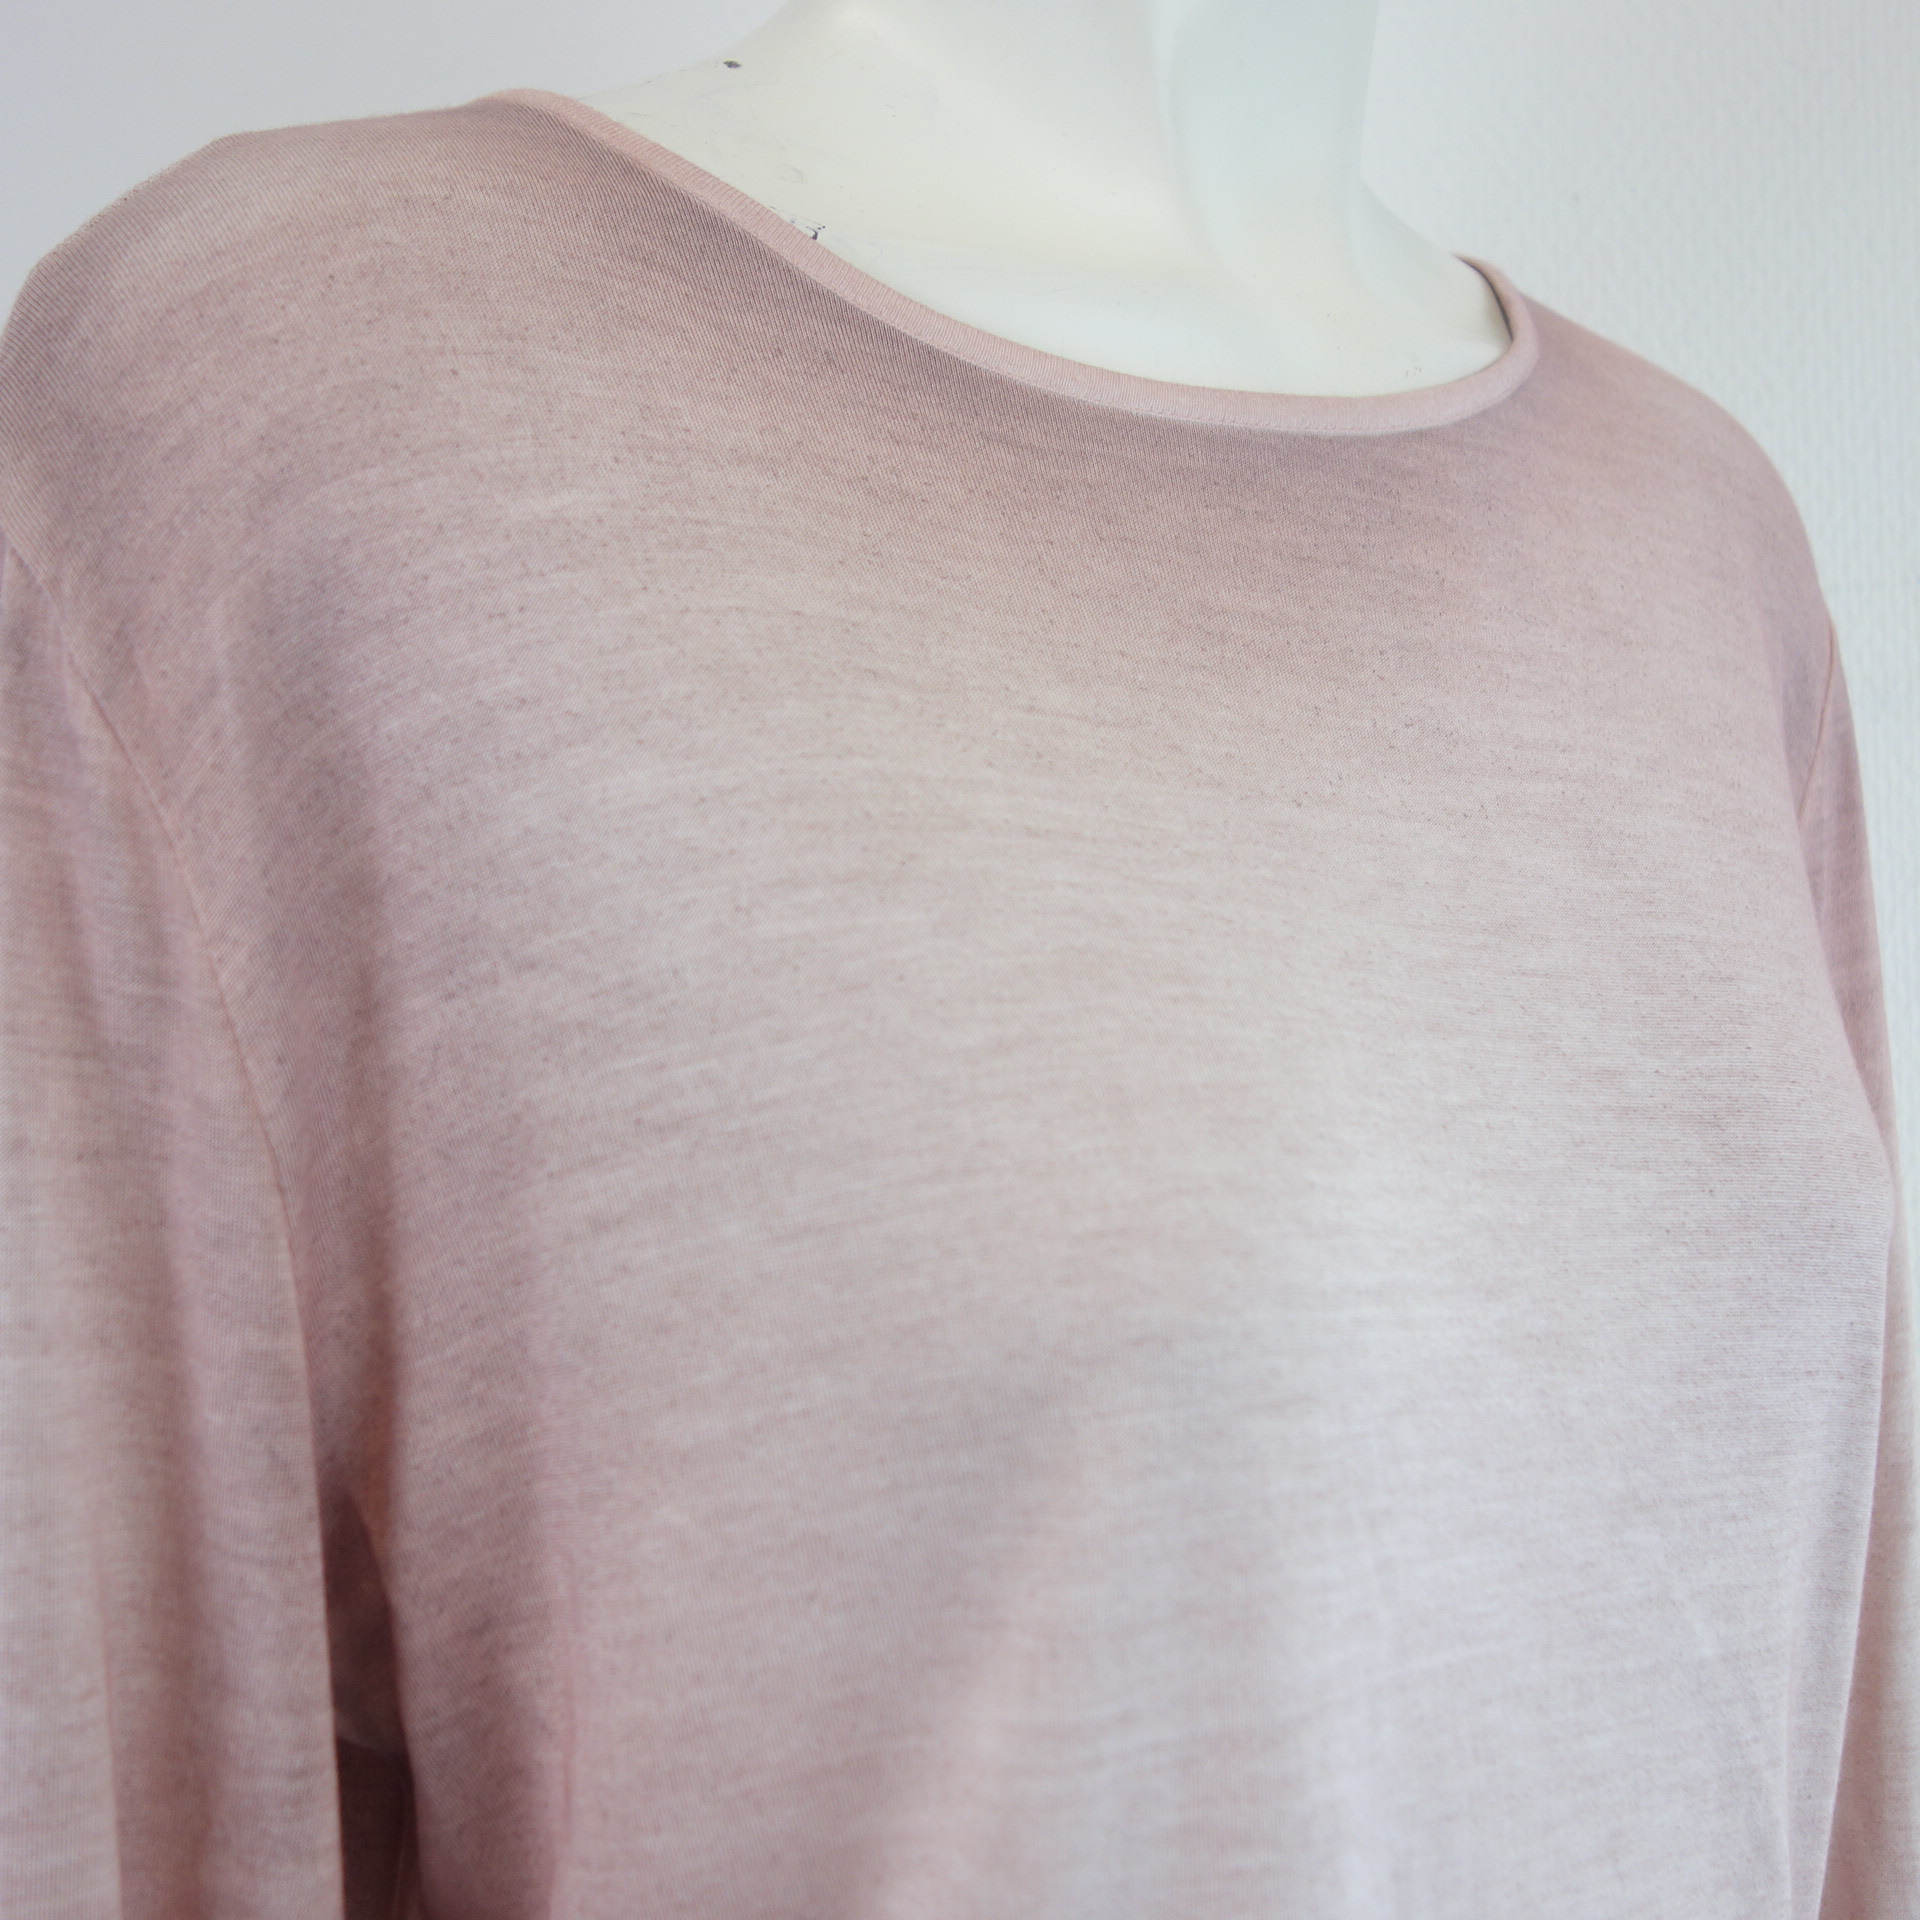 AVANT TOI Damen Langes Shirt Longsleeve Rose Nude 100% Modal Ombre Färbung